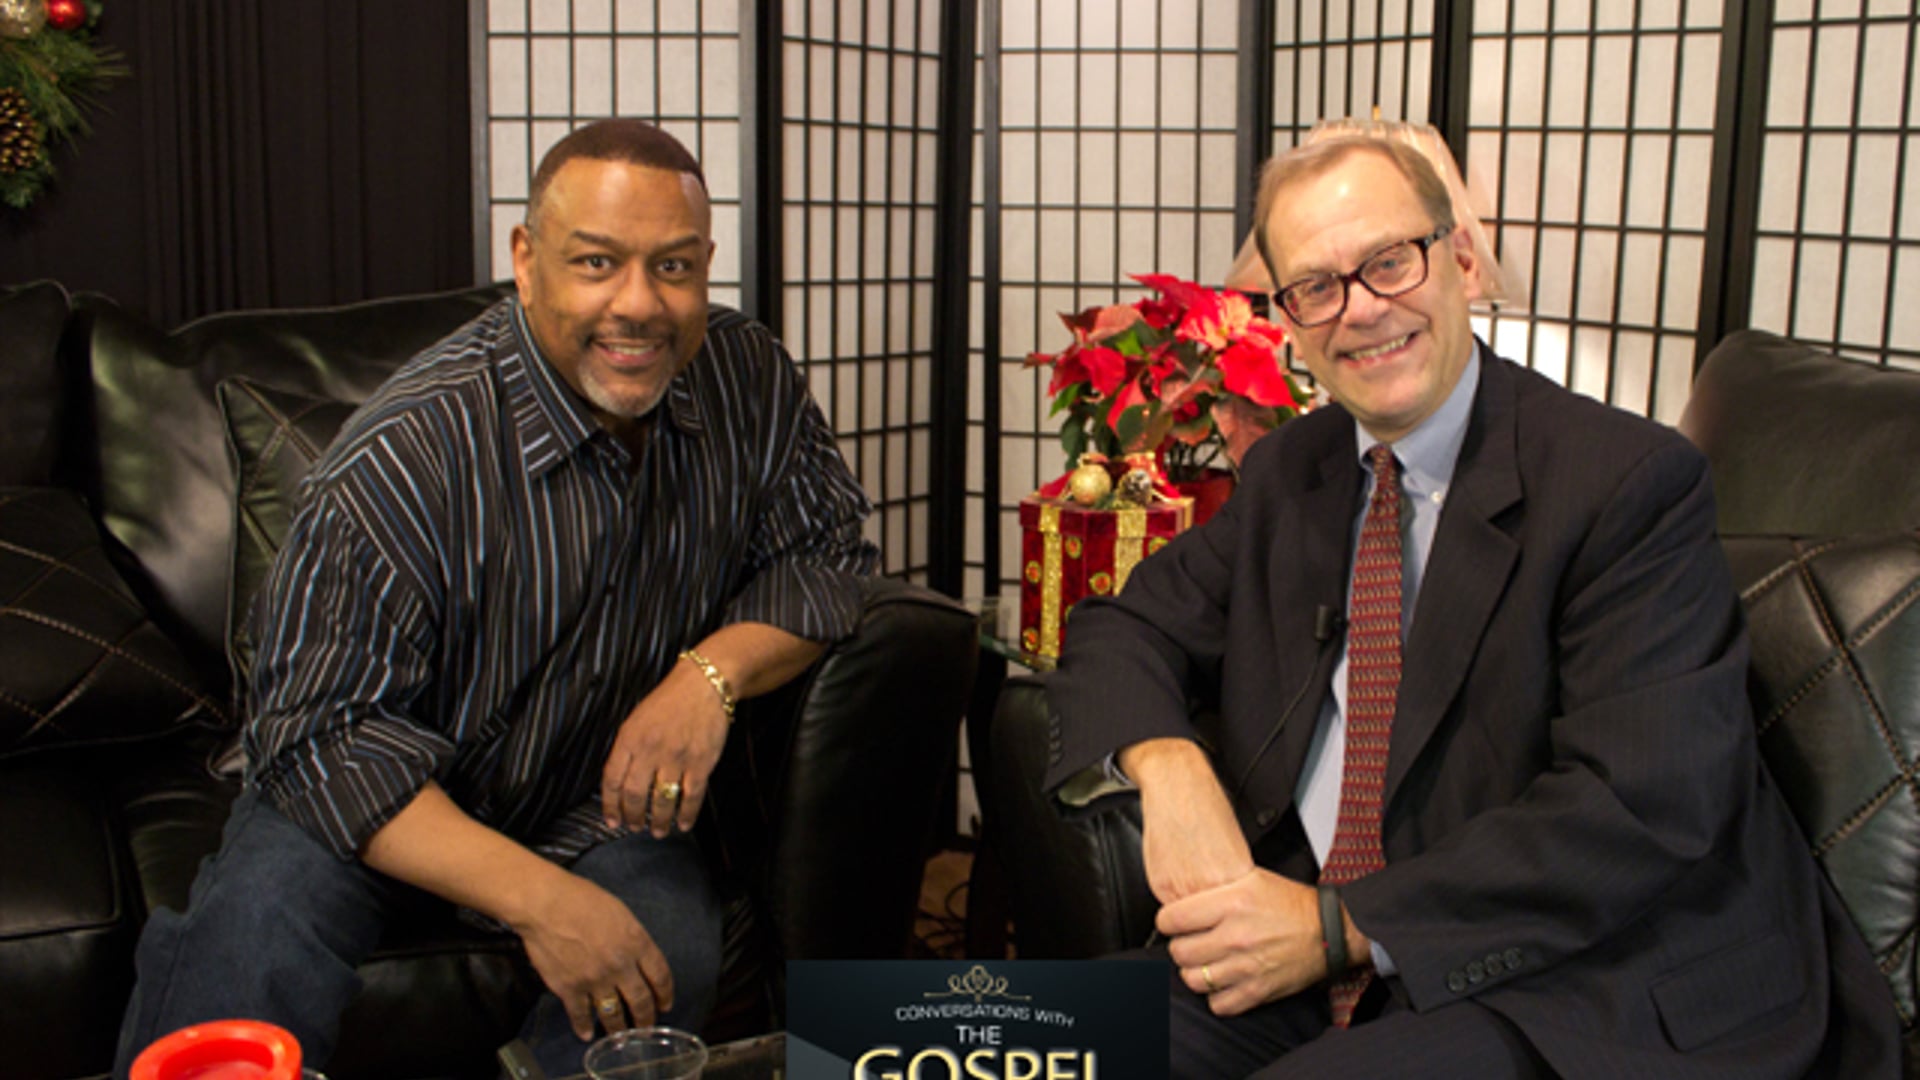 Conversations with The Gospel Legends with Bob Marovich. Guest: Calvin Bridges